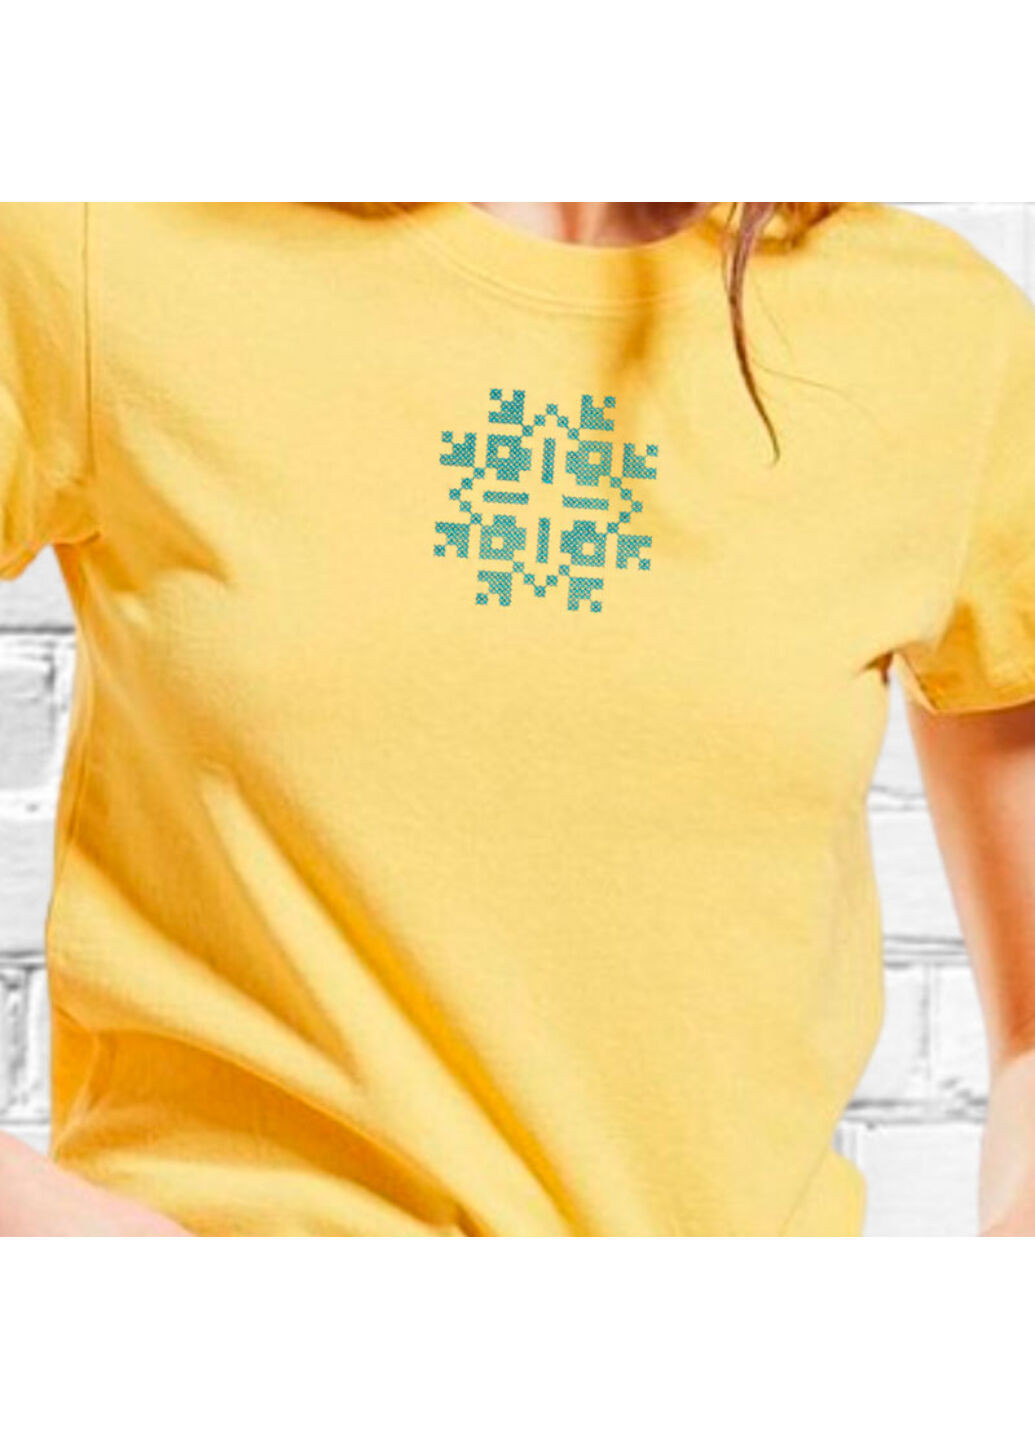 Желтая футболка етно з вишивкою 02-3 женская желтый 2xl No Brand